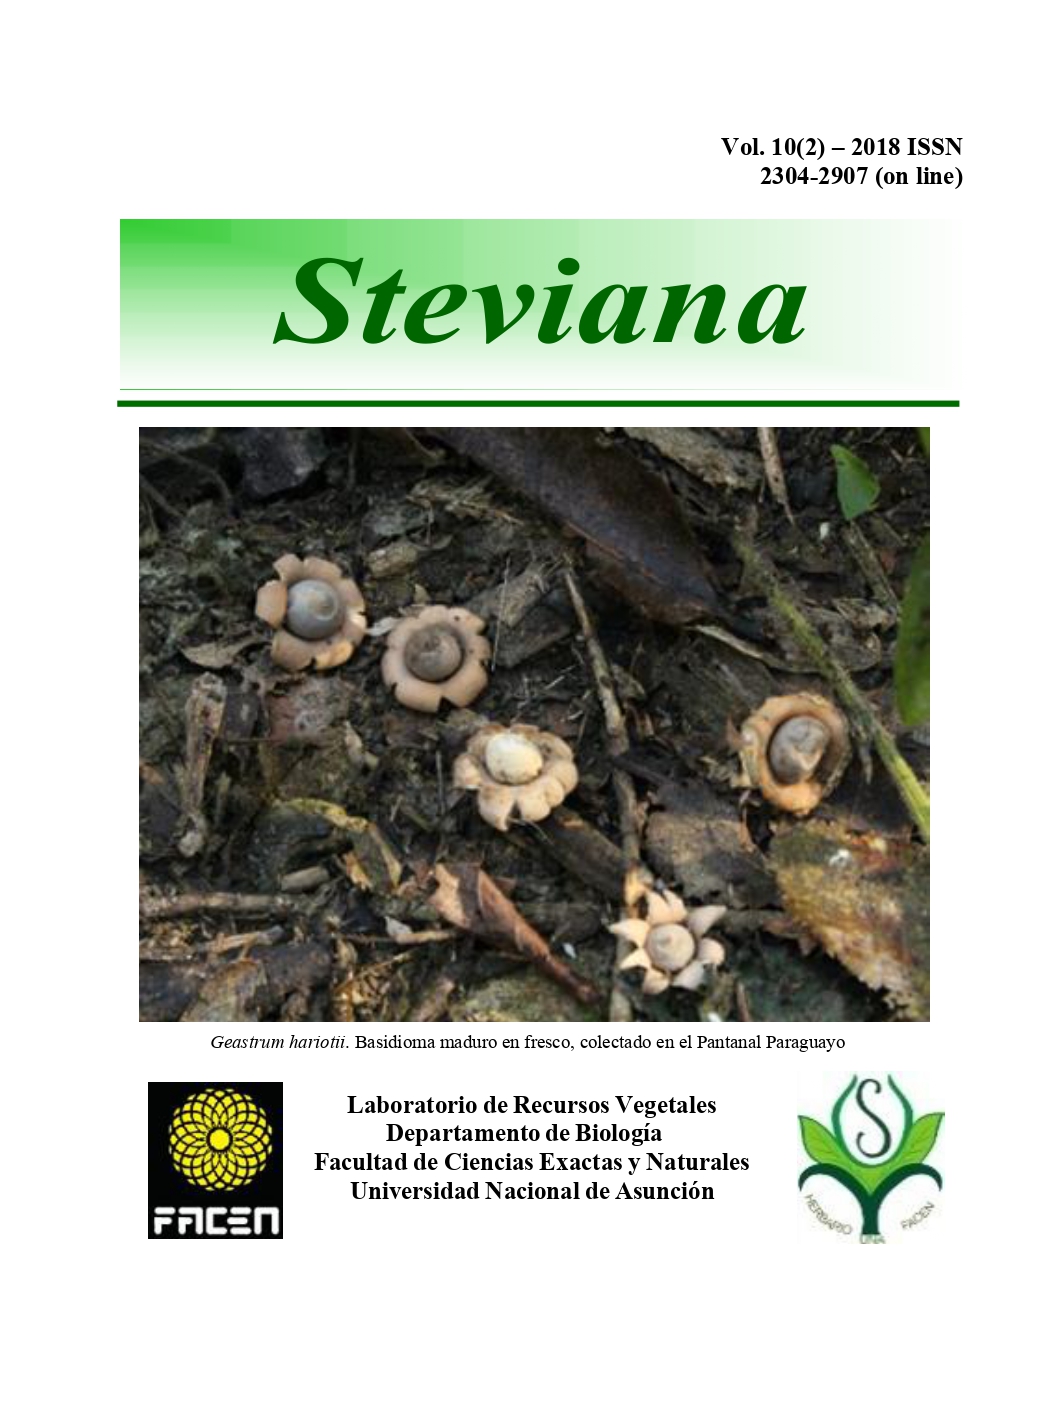 					Ver Vol. 10 Núm. 2 (2018): Steviana
				